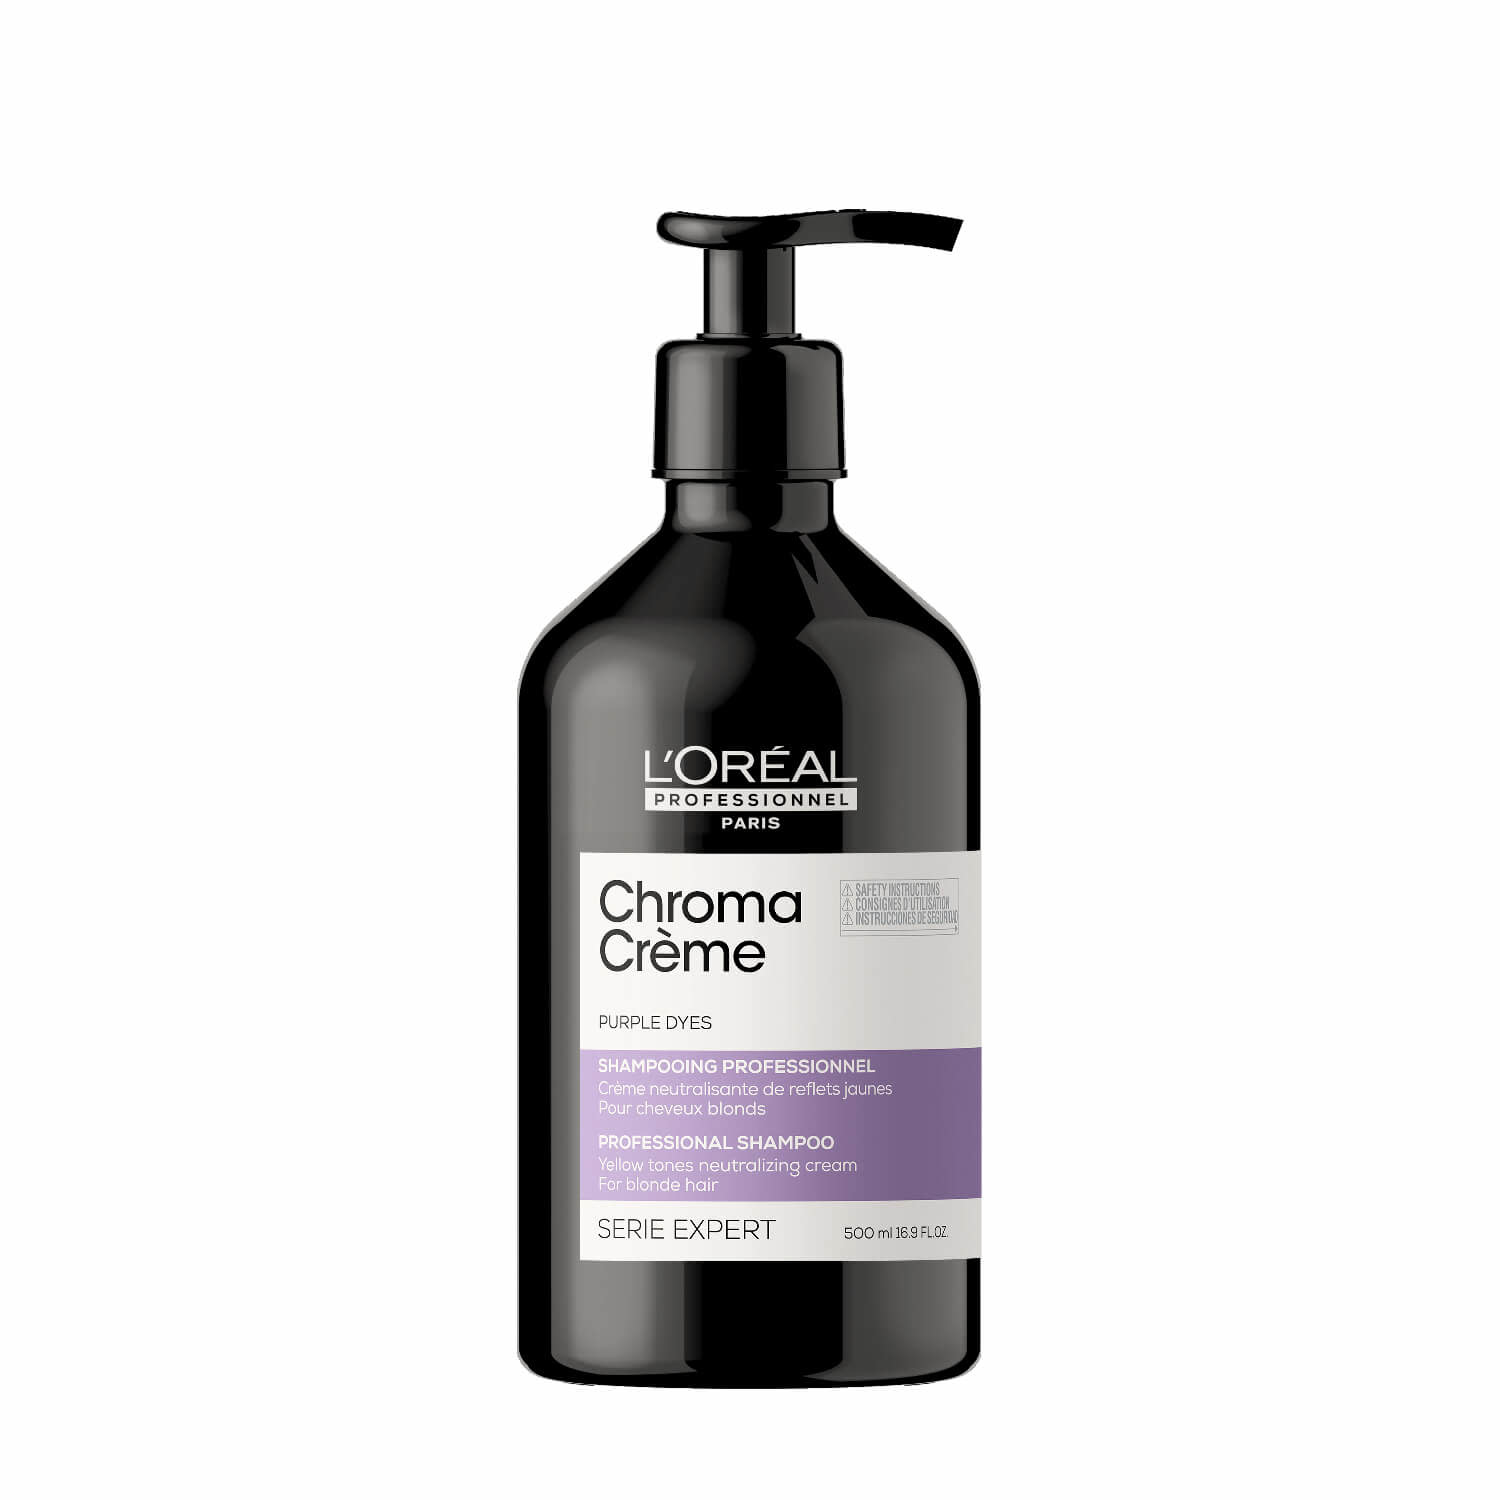 CHROMA CRÈME Purple Dyes Shampoo